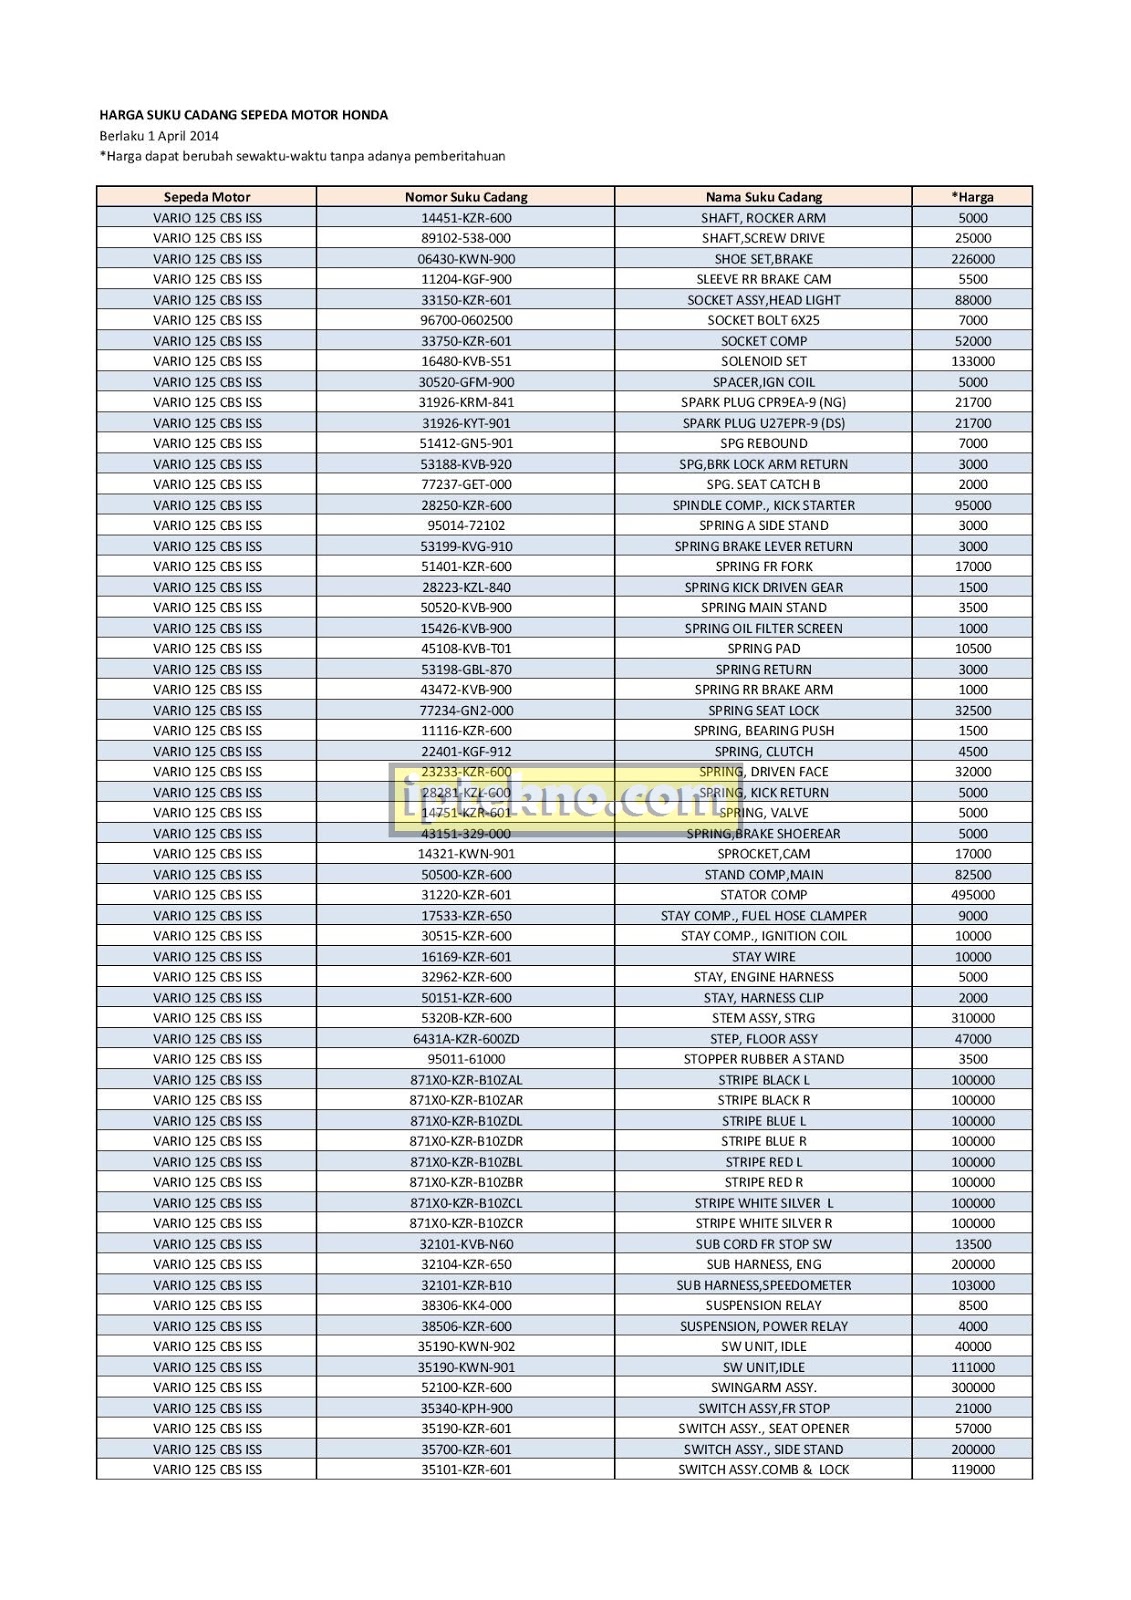 Daftar Harga Suku Cadang Motor Honda Revo - motorkemana